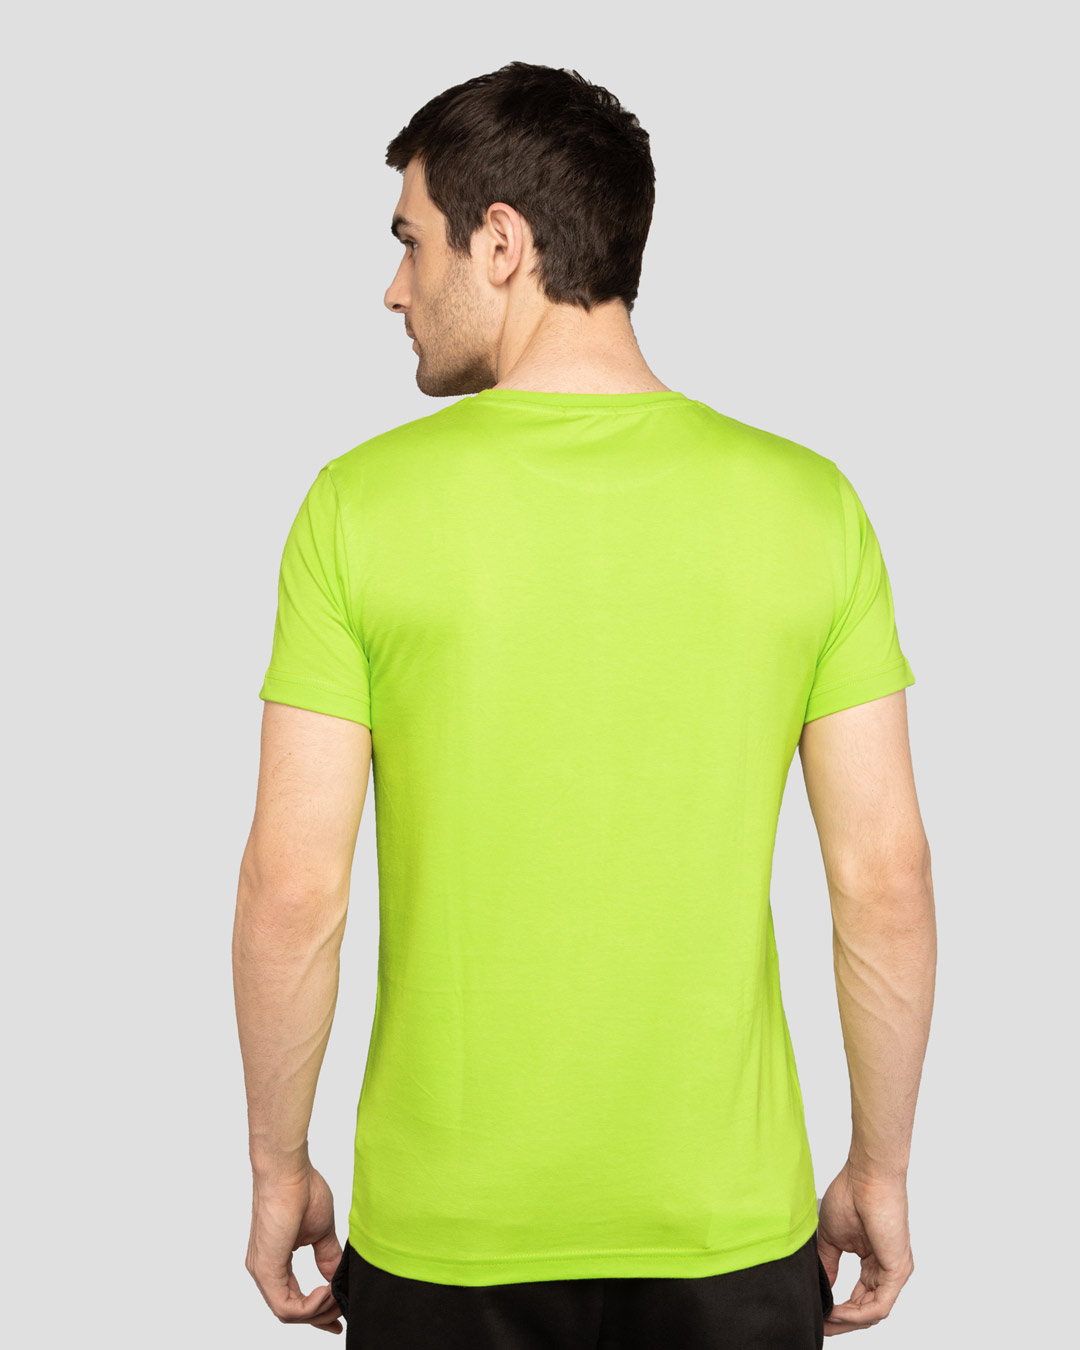 Shop Sadda Pain Half Sleeve T-Shirt Neon Green -Back